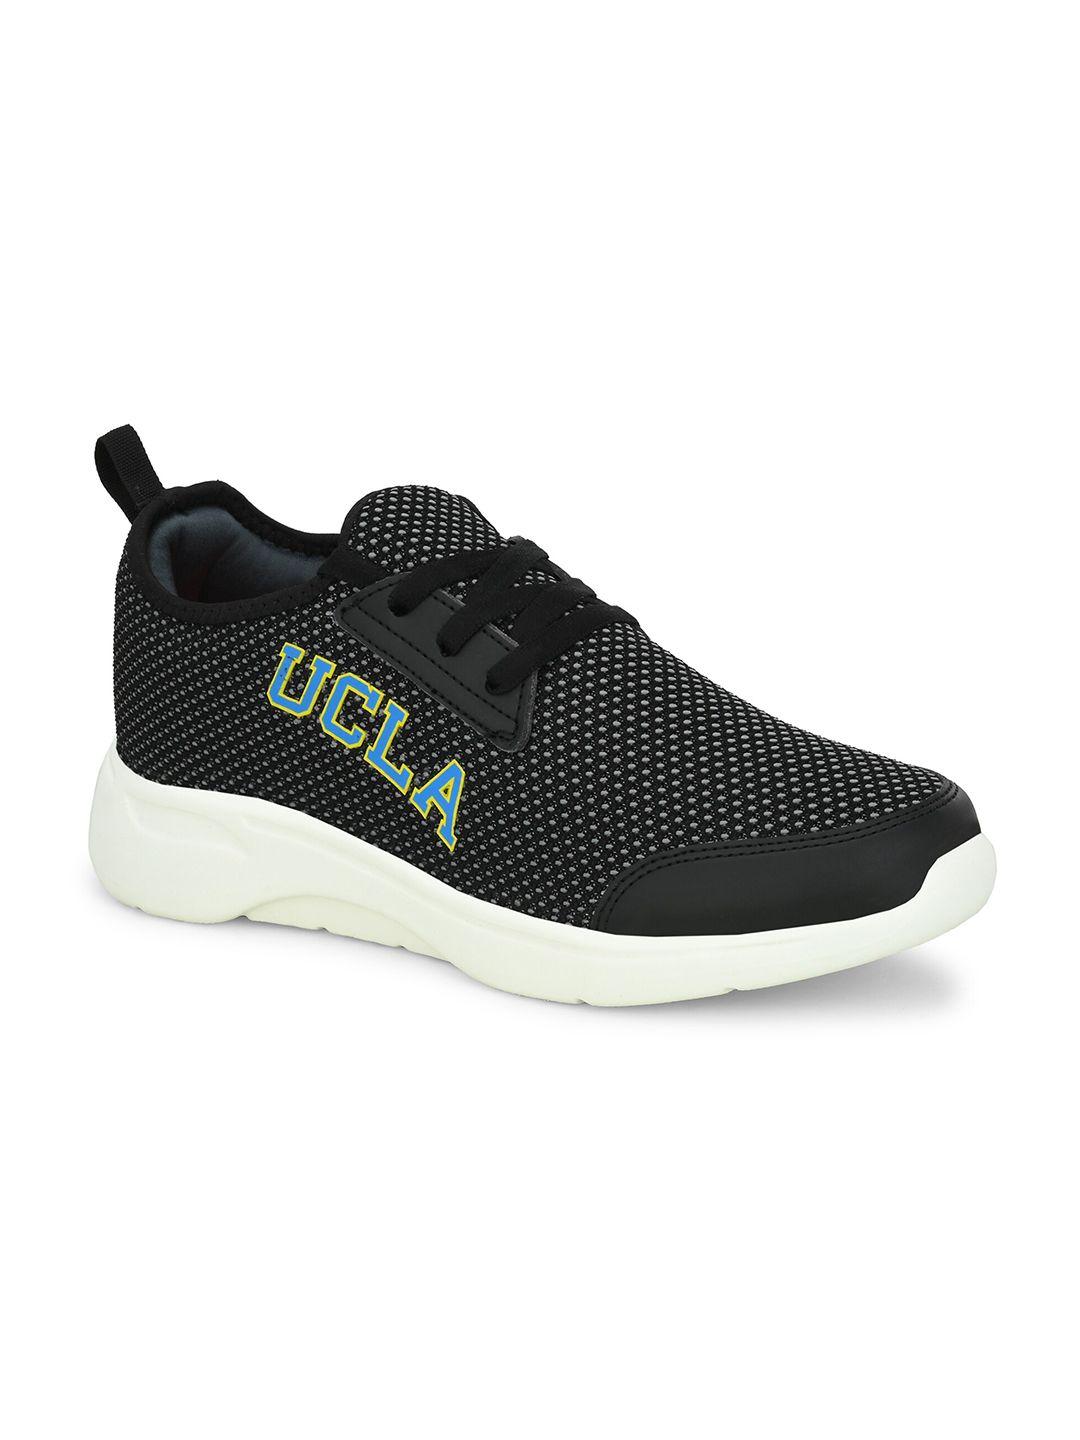 ucla men black non-marking running sports shoes